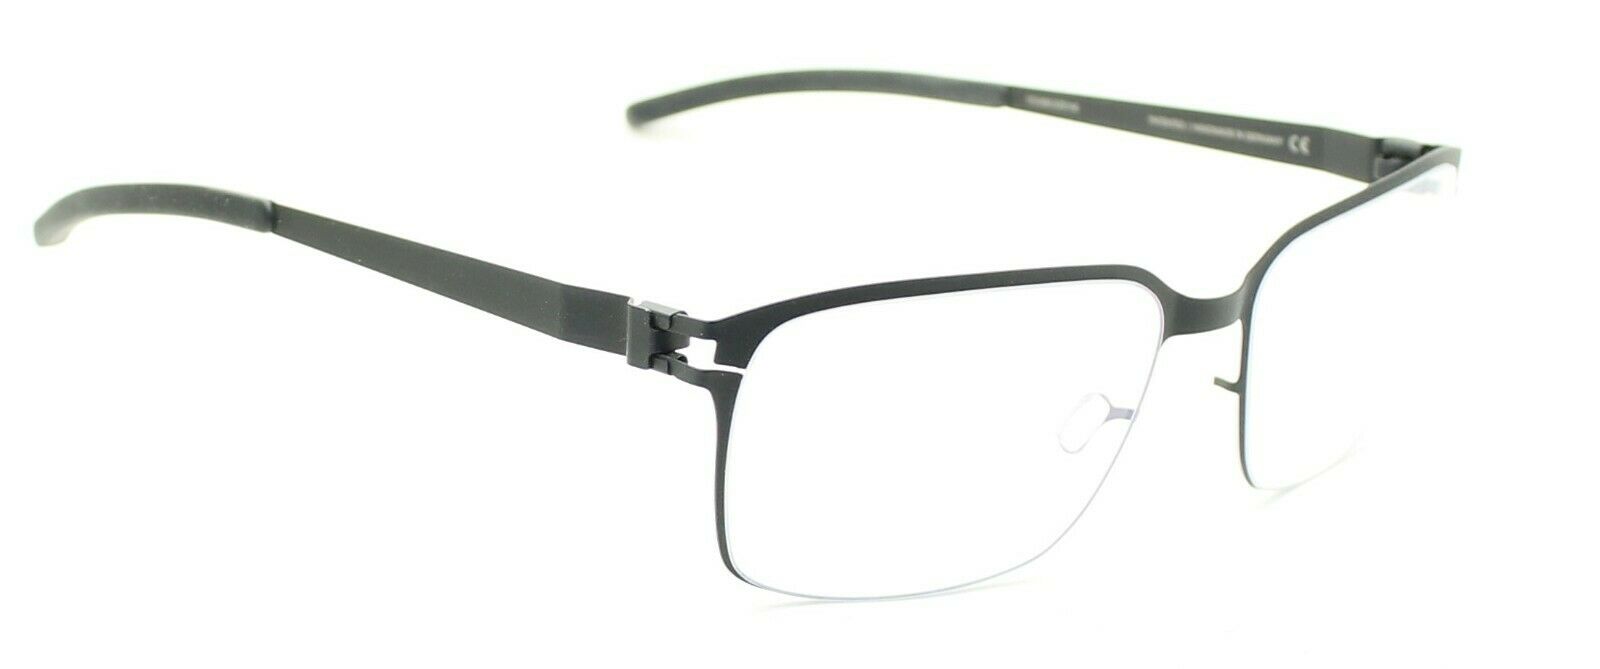 MYKITA NO. 1 *NEIL*  002 56mm RX Optical FRAMES Glasses Eyeglasses Germany - New